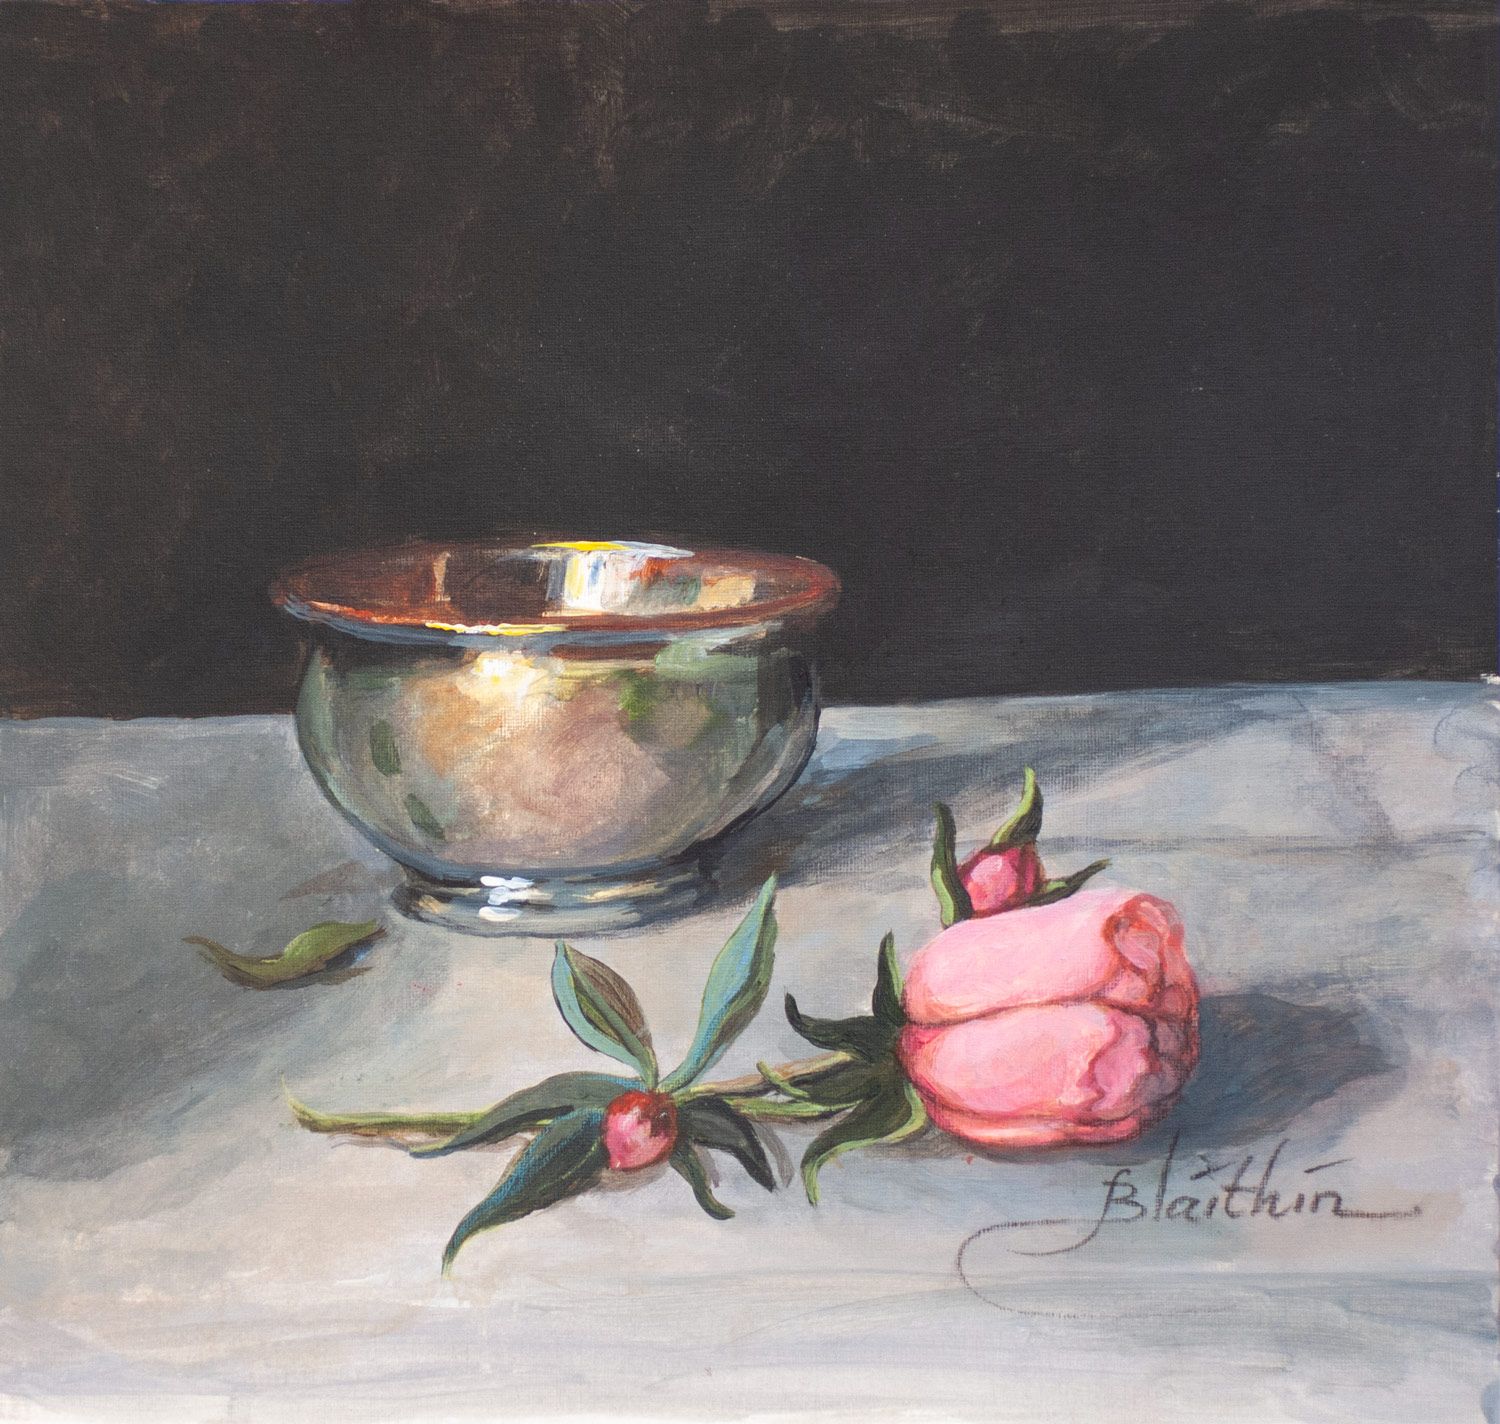 Silver and Rose Petals by Blaithin O'Ciobhain